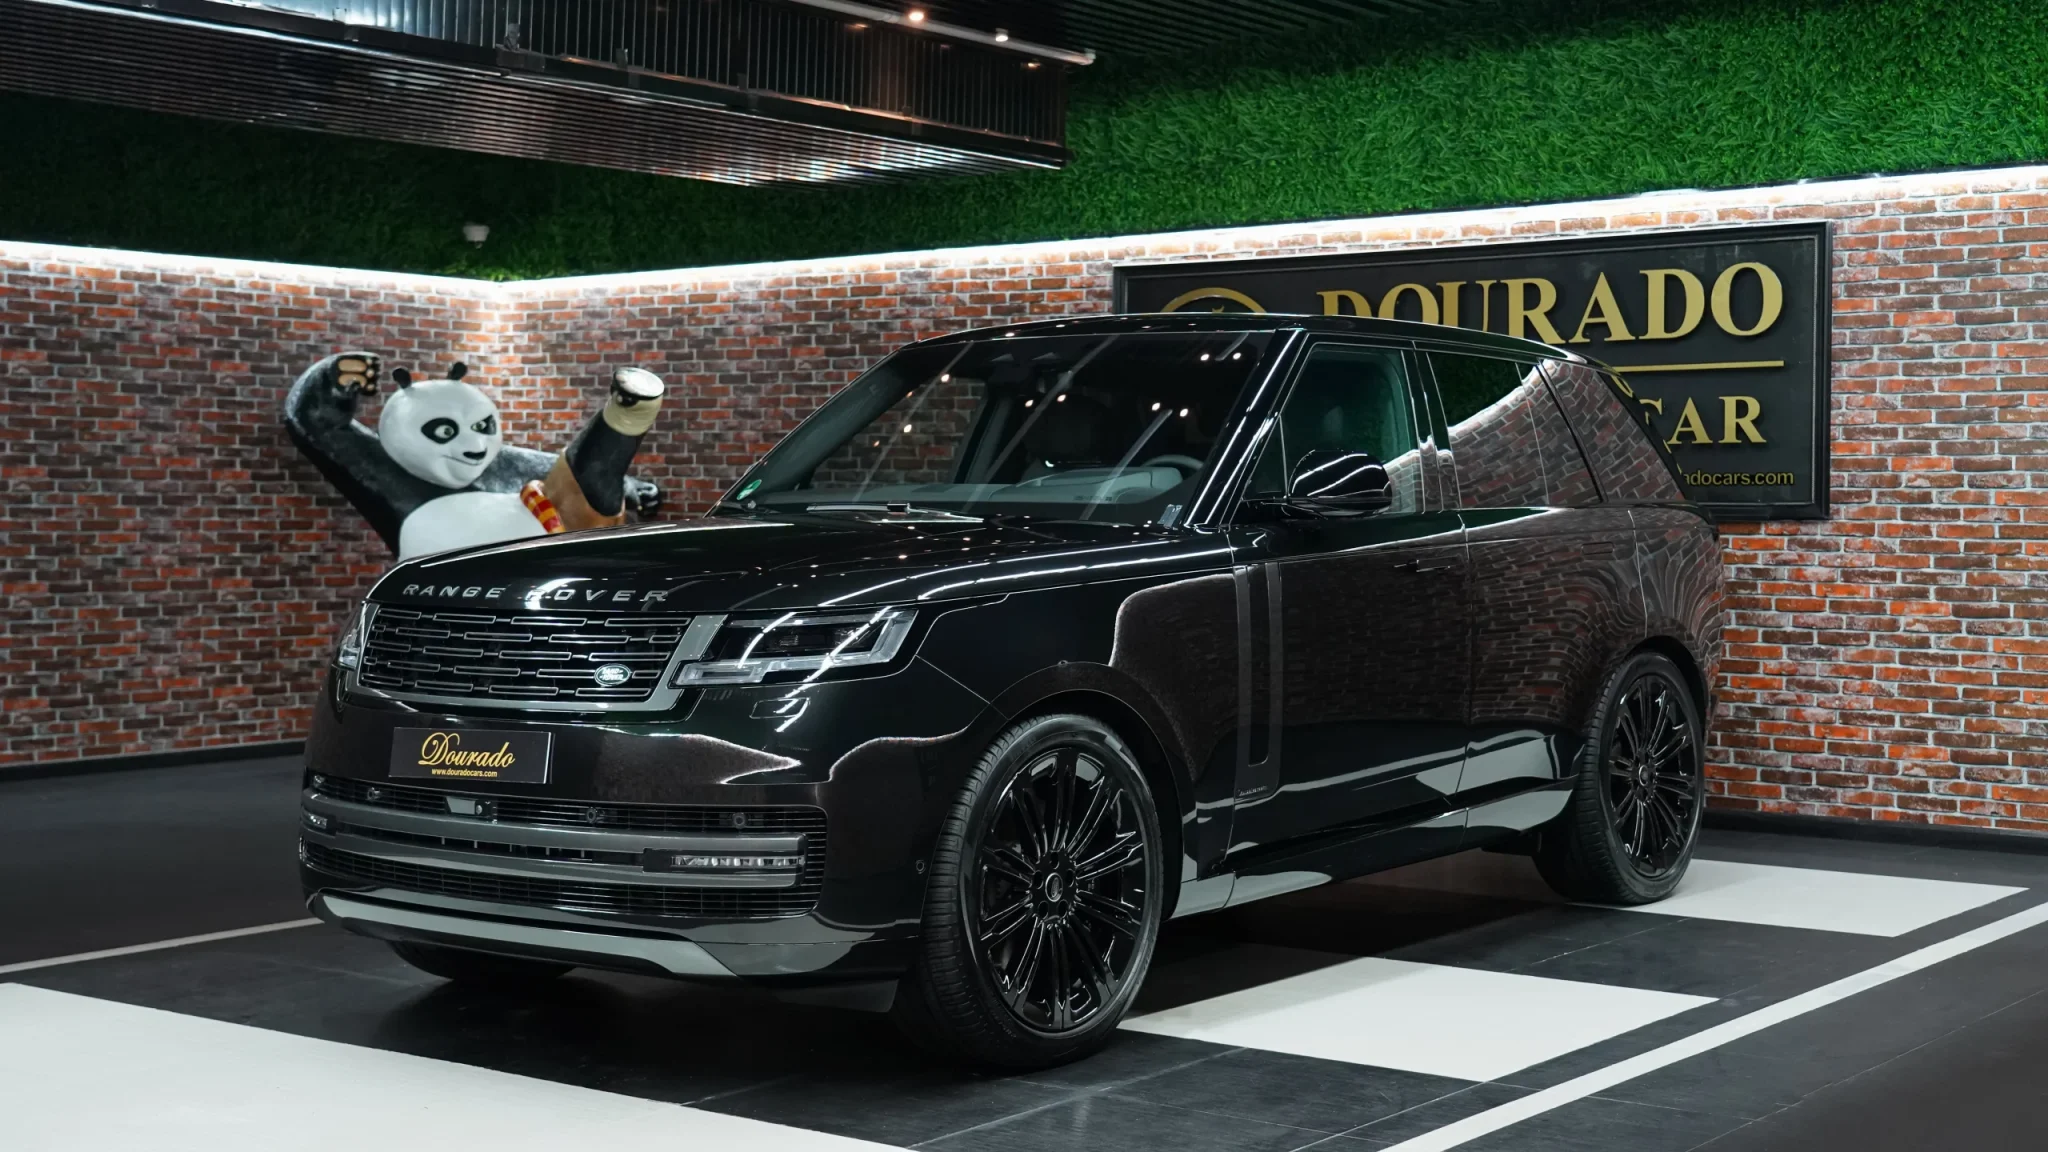 Range Rover Sport Price in UAE: Luxury SUV Price Monitoring - Dourado ...